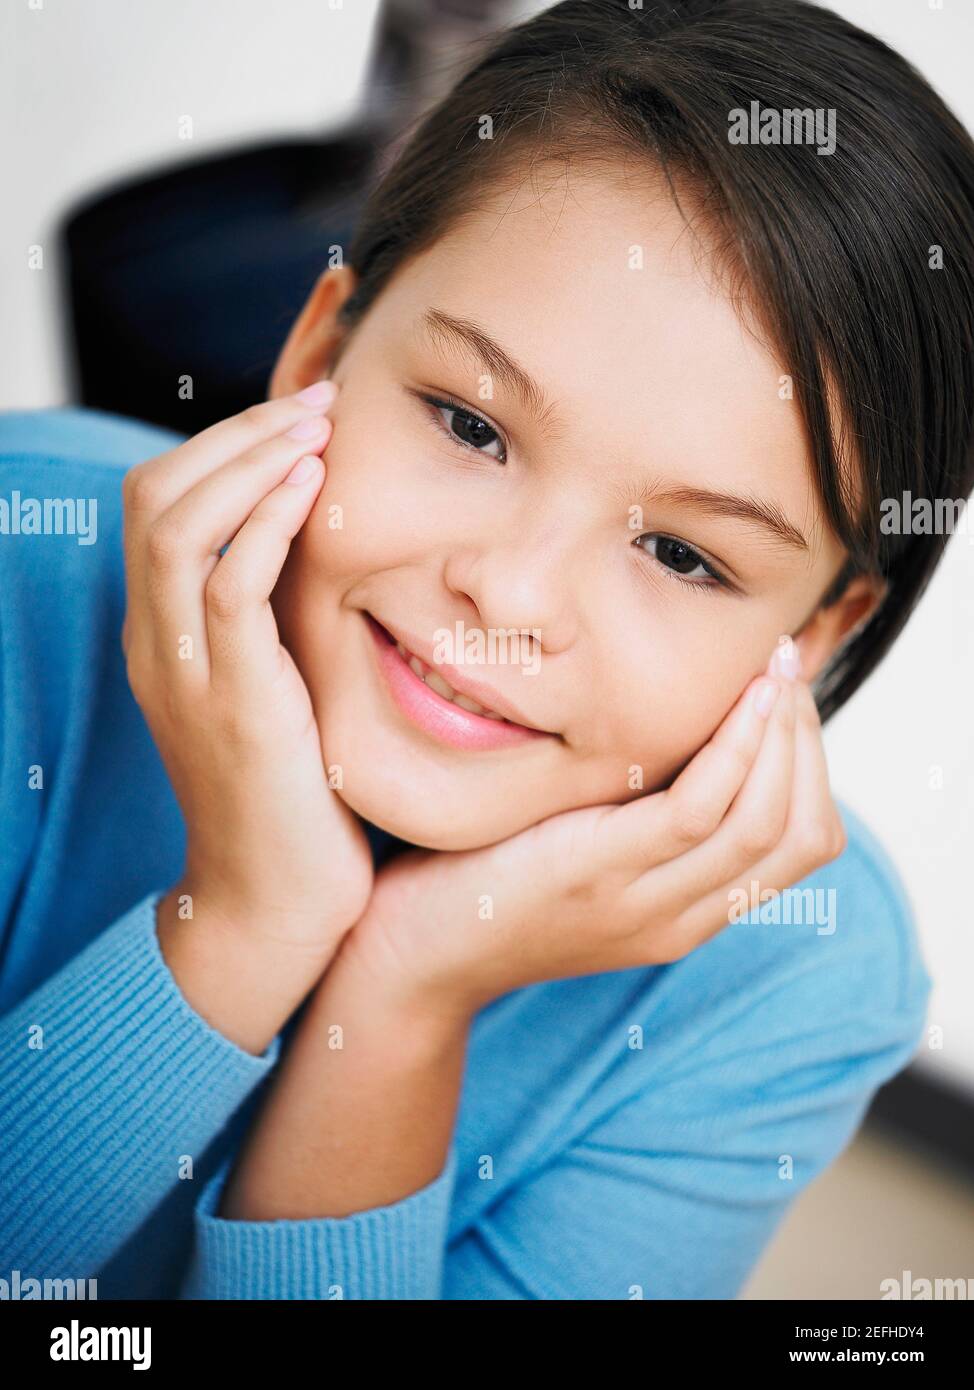 Portrait of a Girl smiling Banque D'Images